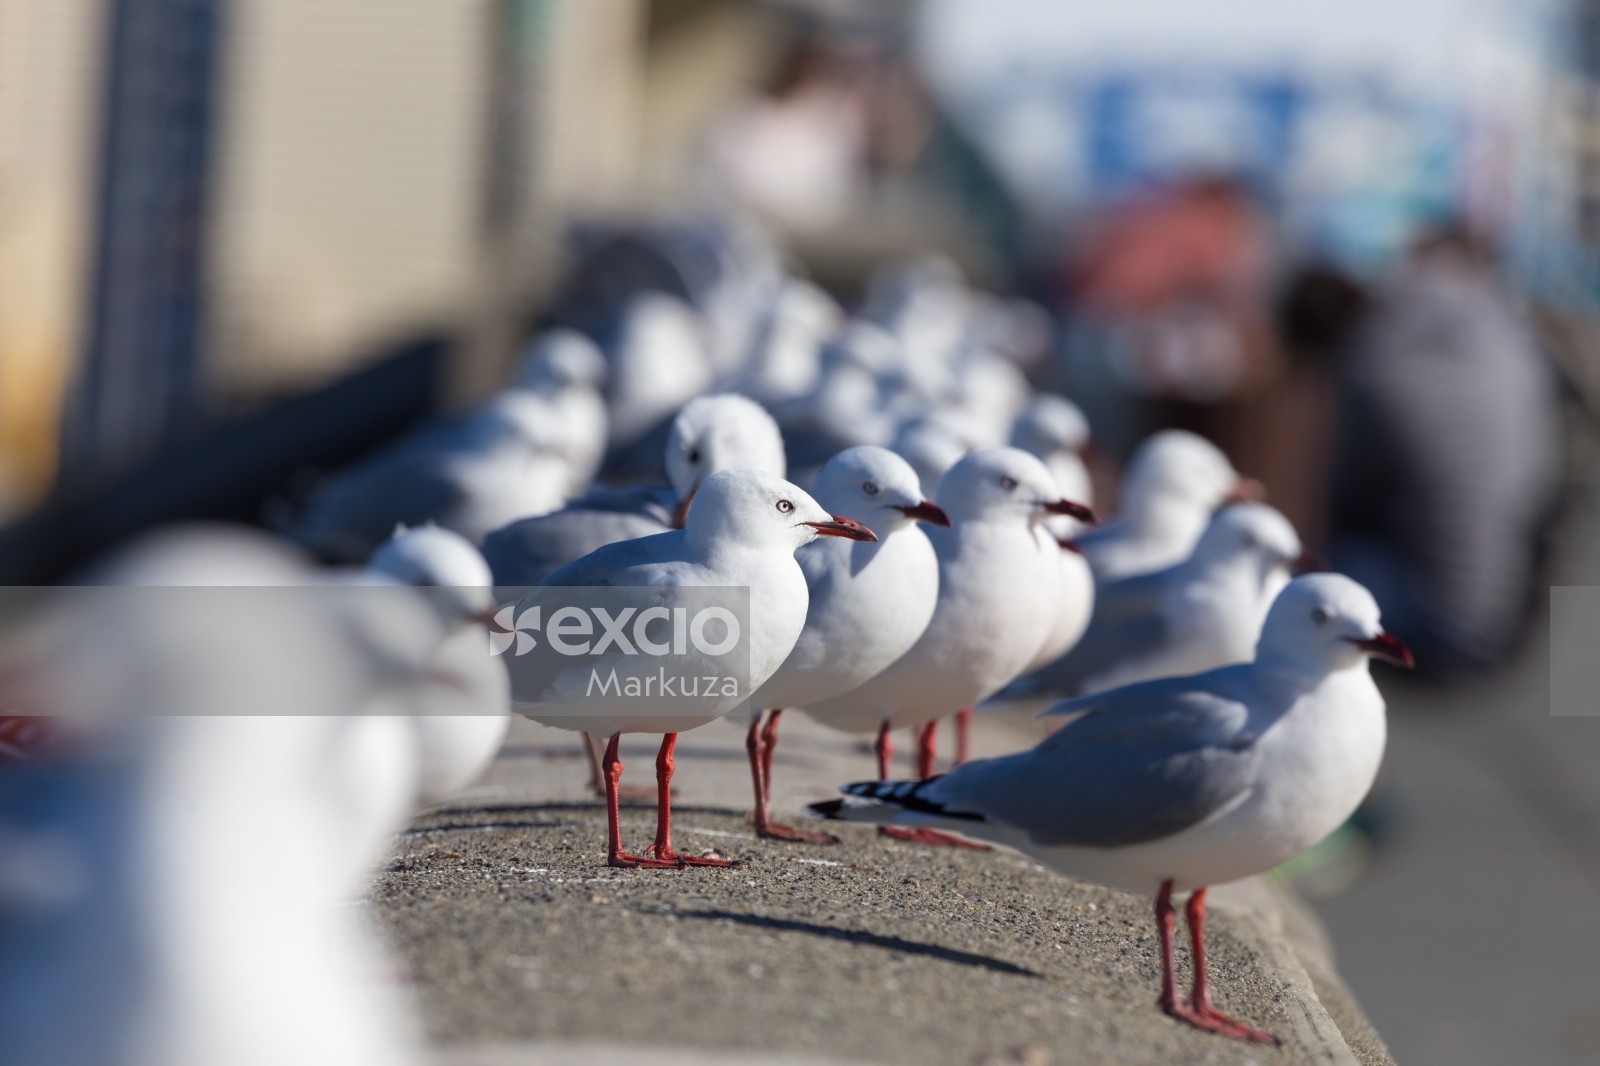 Waiting seagulls